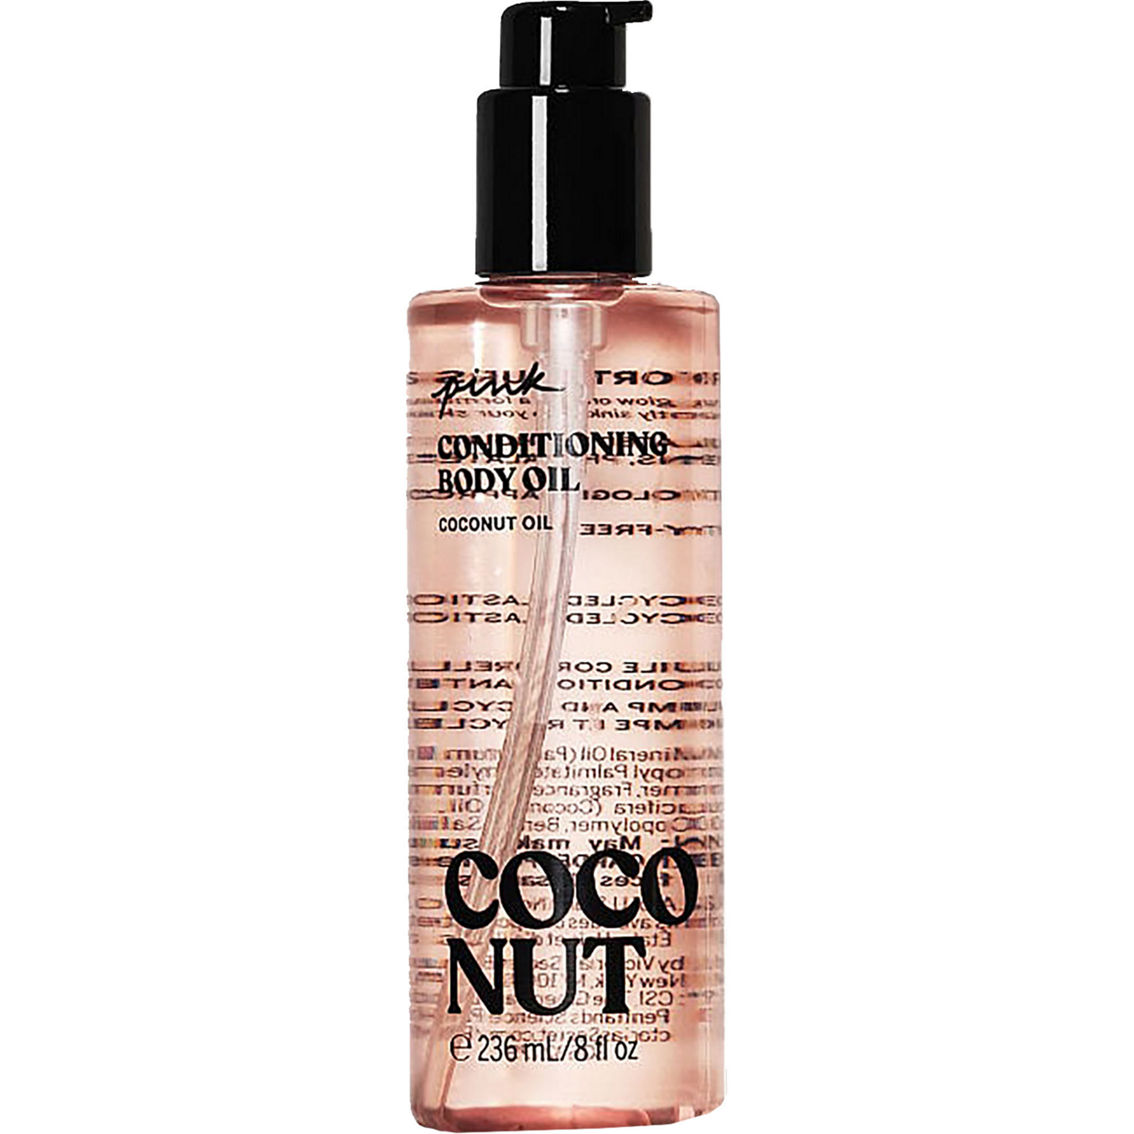 Victoria's Secret Pink Oil Sleek Coconut Oil Hydrating Body Oil, Body Oils, Beauty & Health